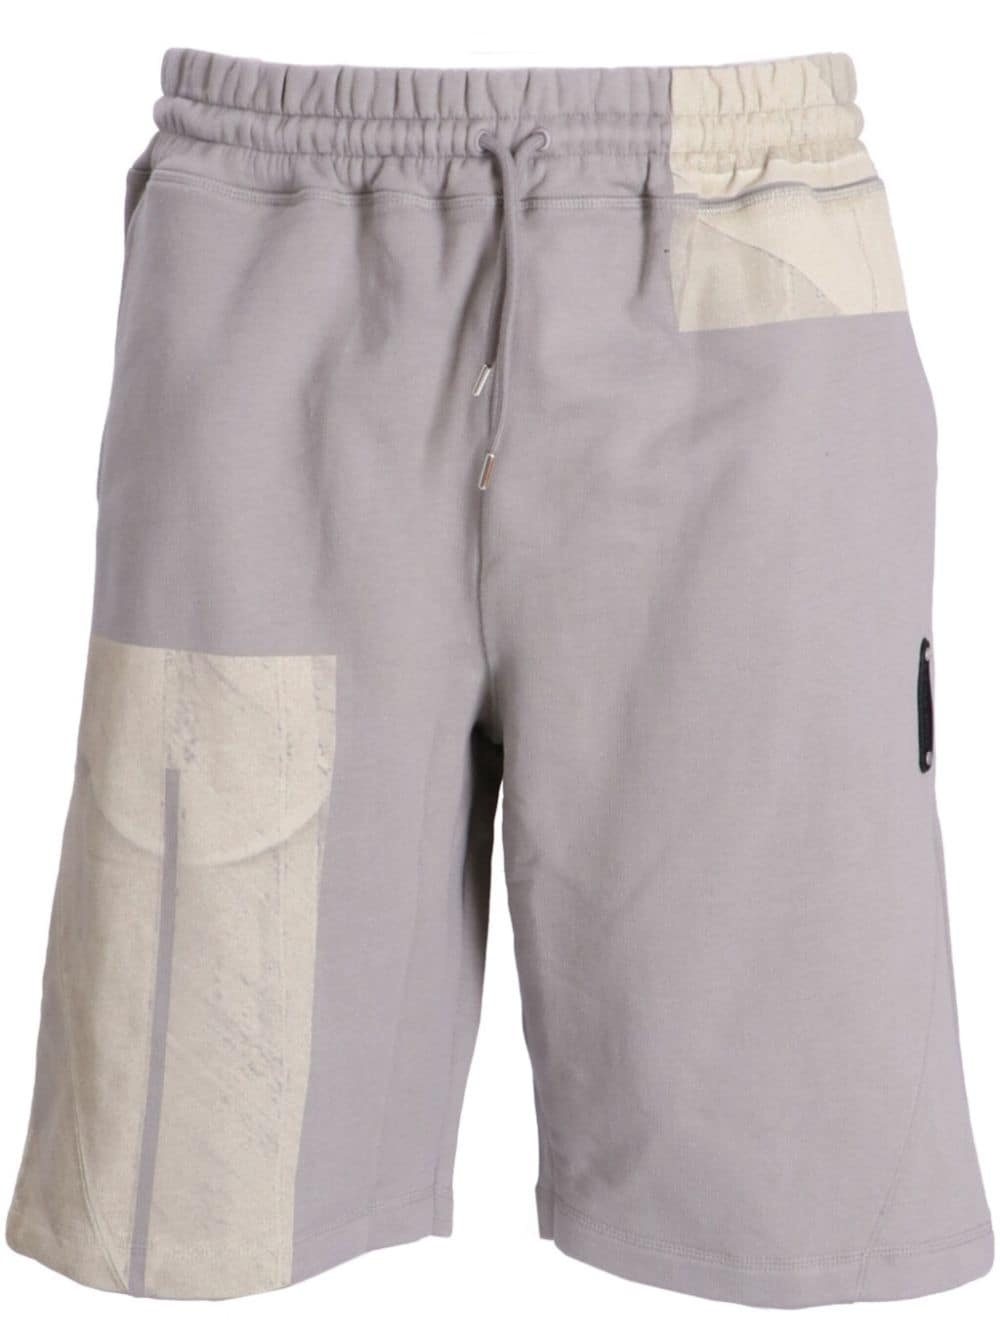 Strand cotton shorts - 1